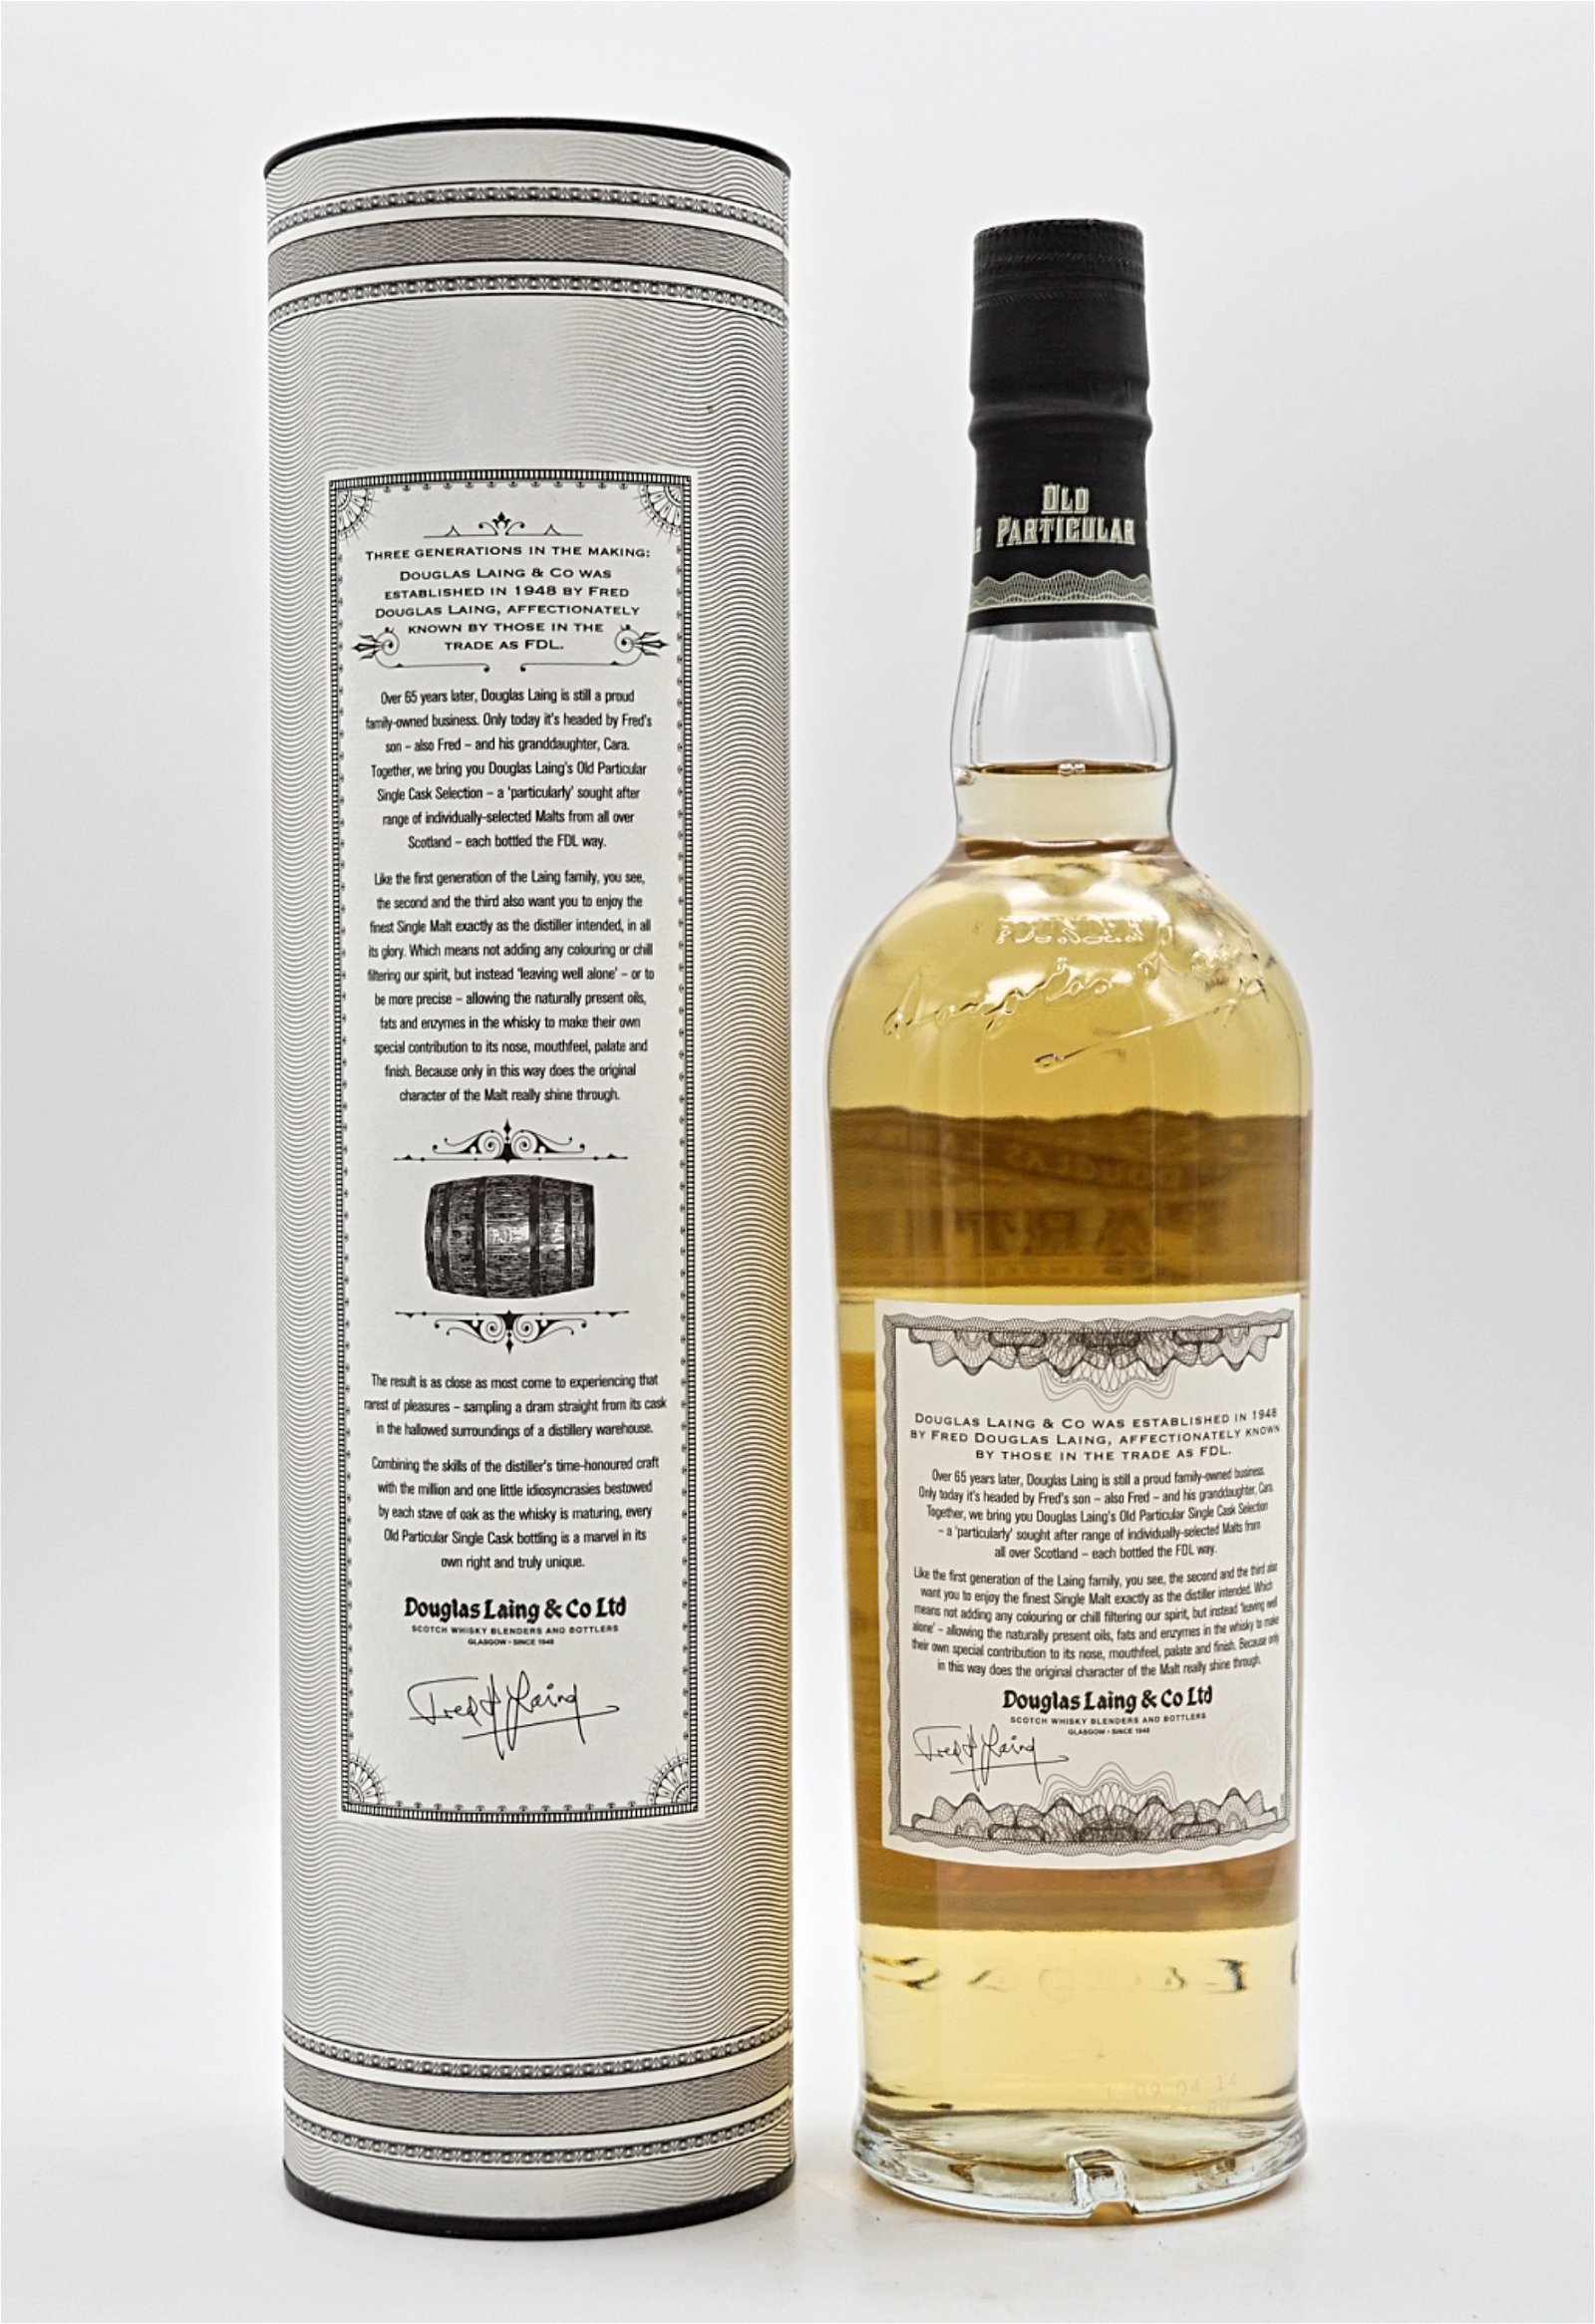 Old Particular Glen Spey Distillery 15 Jahre 1999/2014 48,4% 324 Fl. Single Cask Single Malt Scotch Whisky